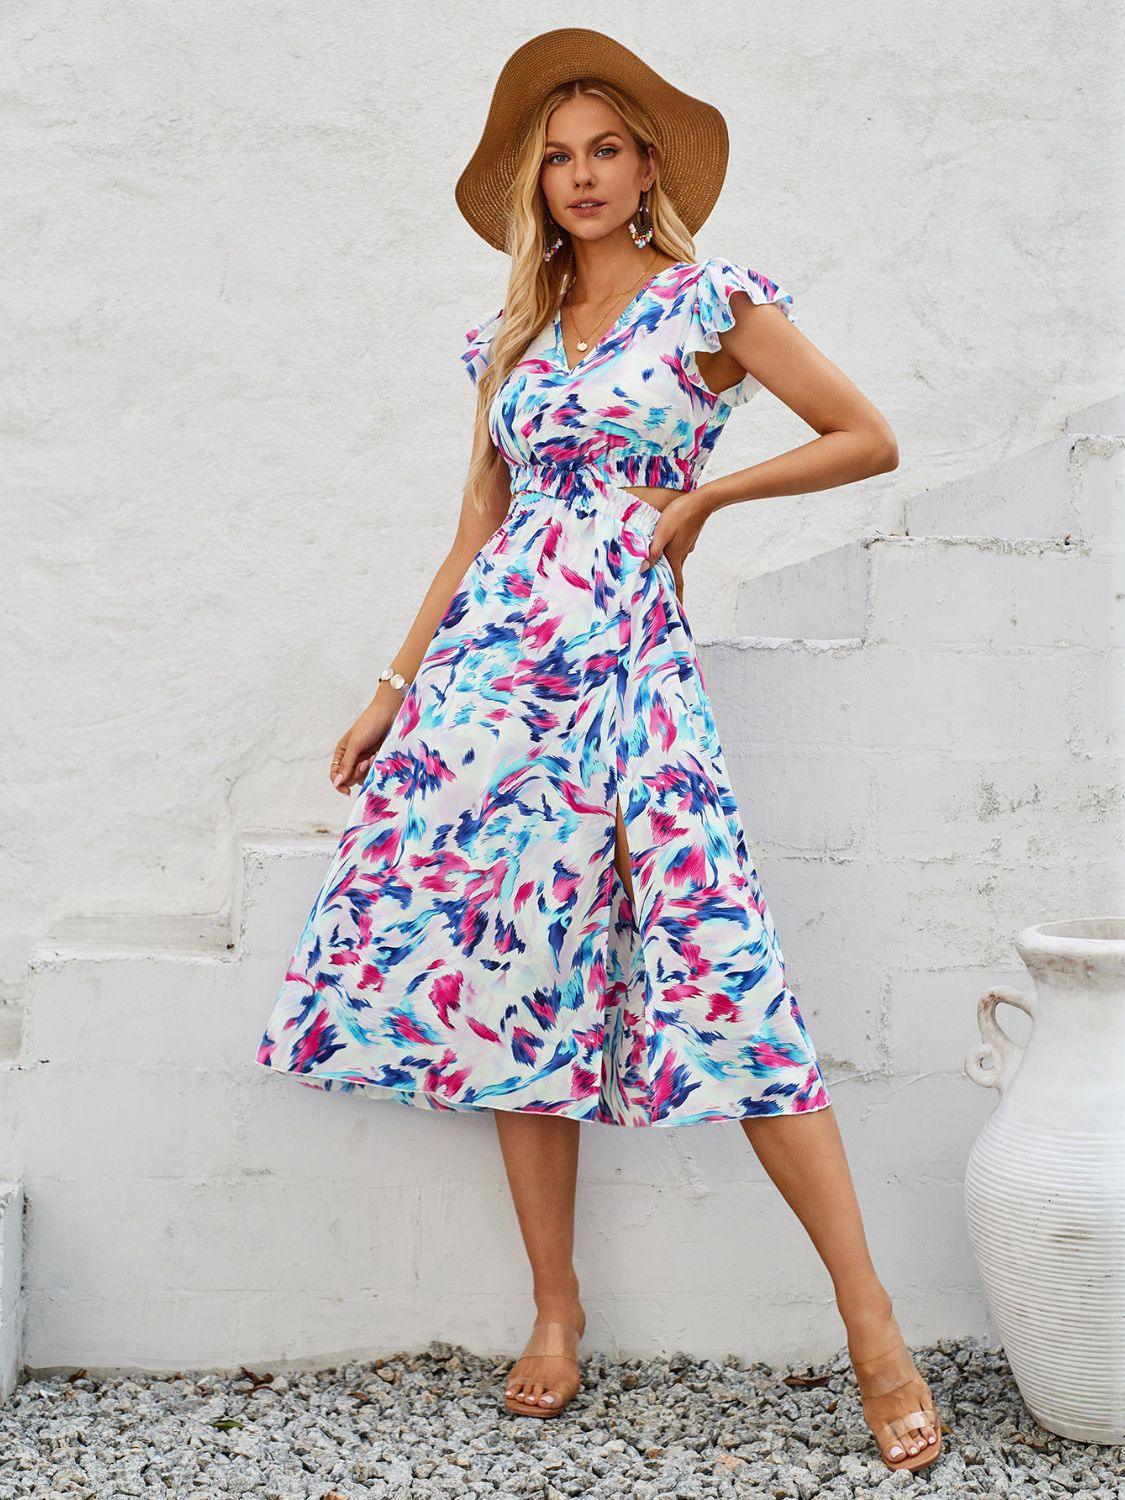 Bona Fide Fashion - Cutout Slit Printed Cap Sleeve Dress - Women Fashion - Bona Fide Fashion